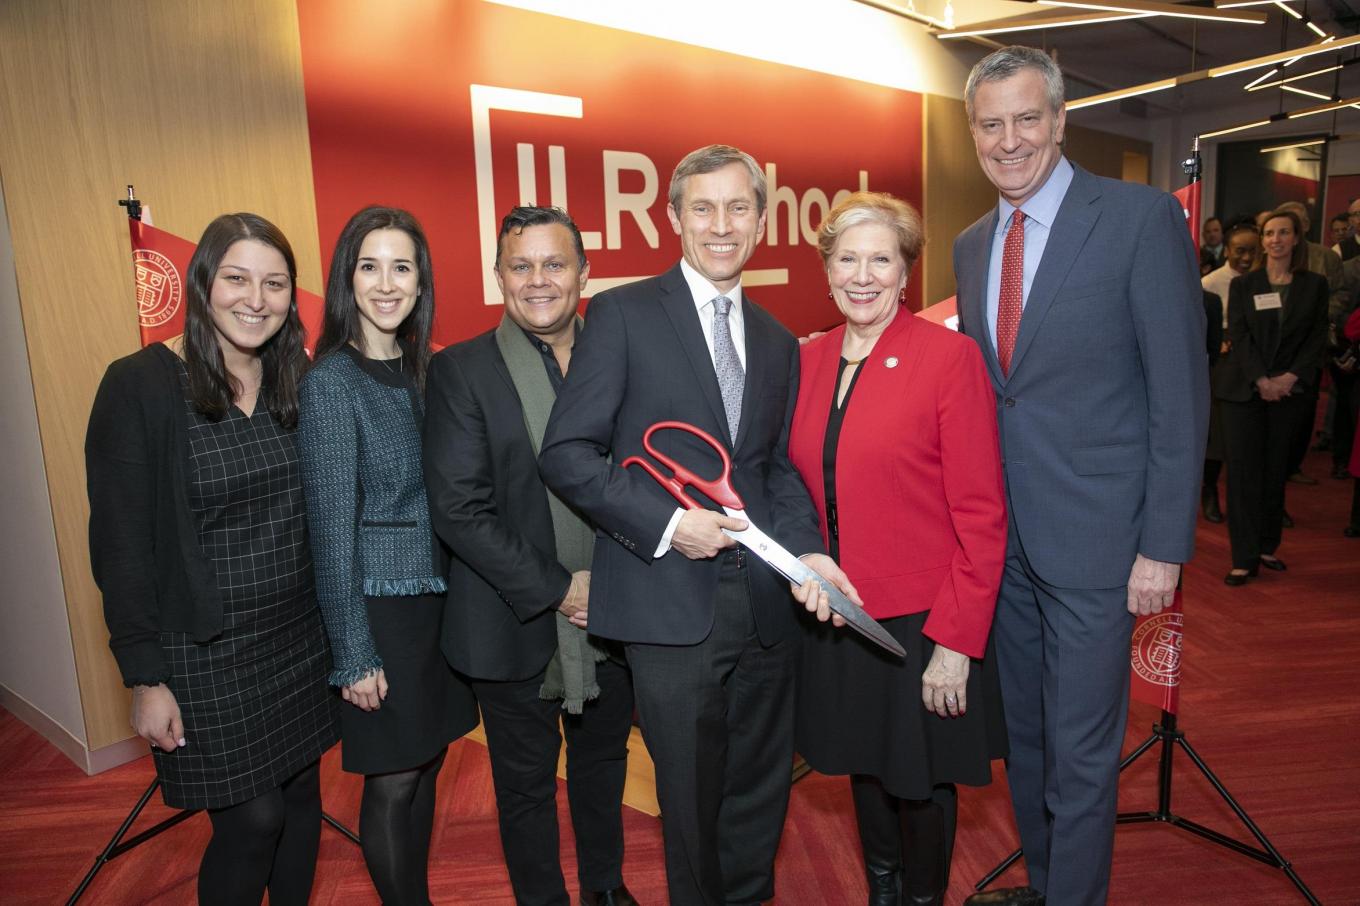 Ribbon cutting at the grand opening of ILR's new Manhattan hub